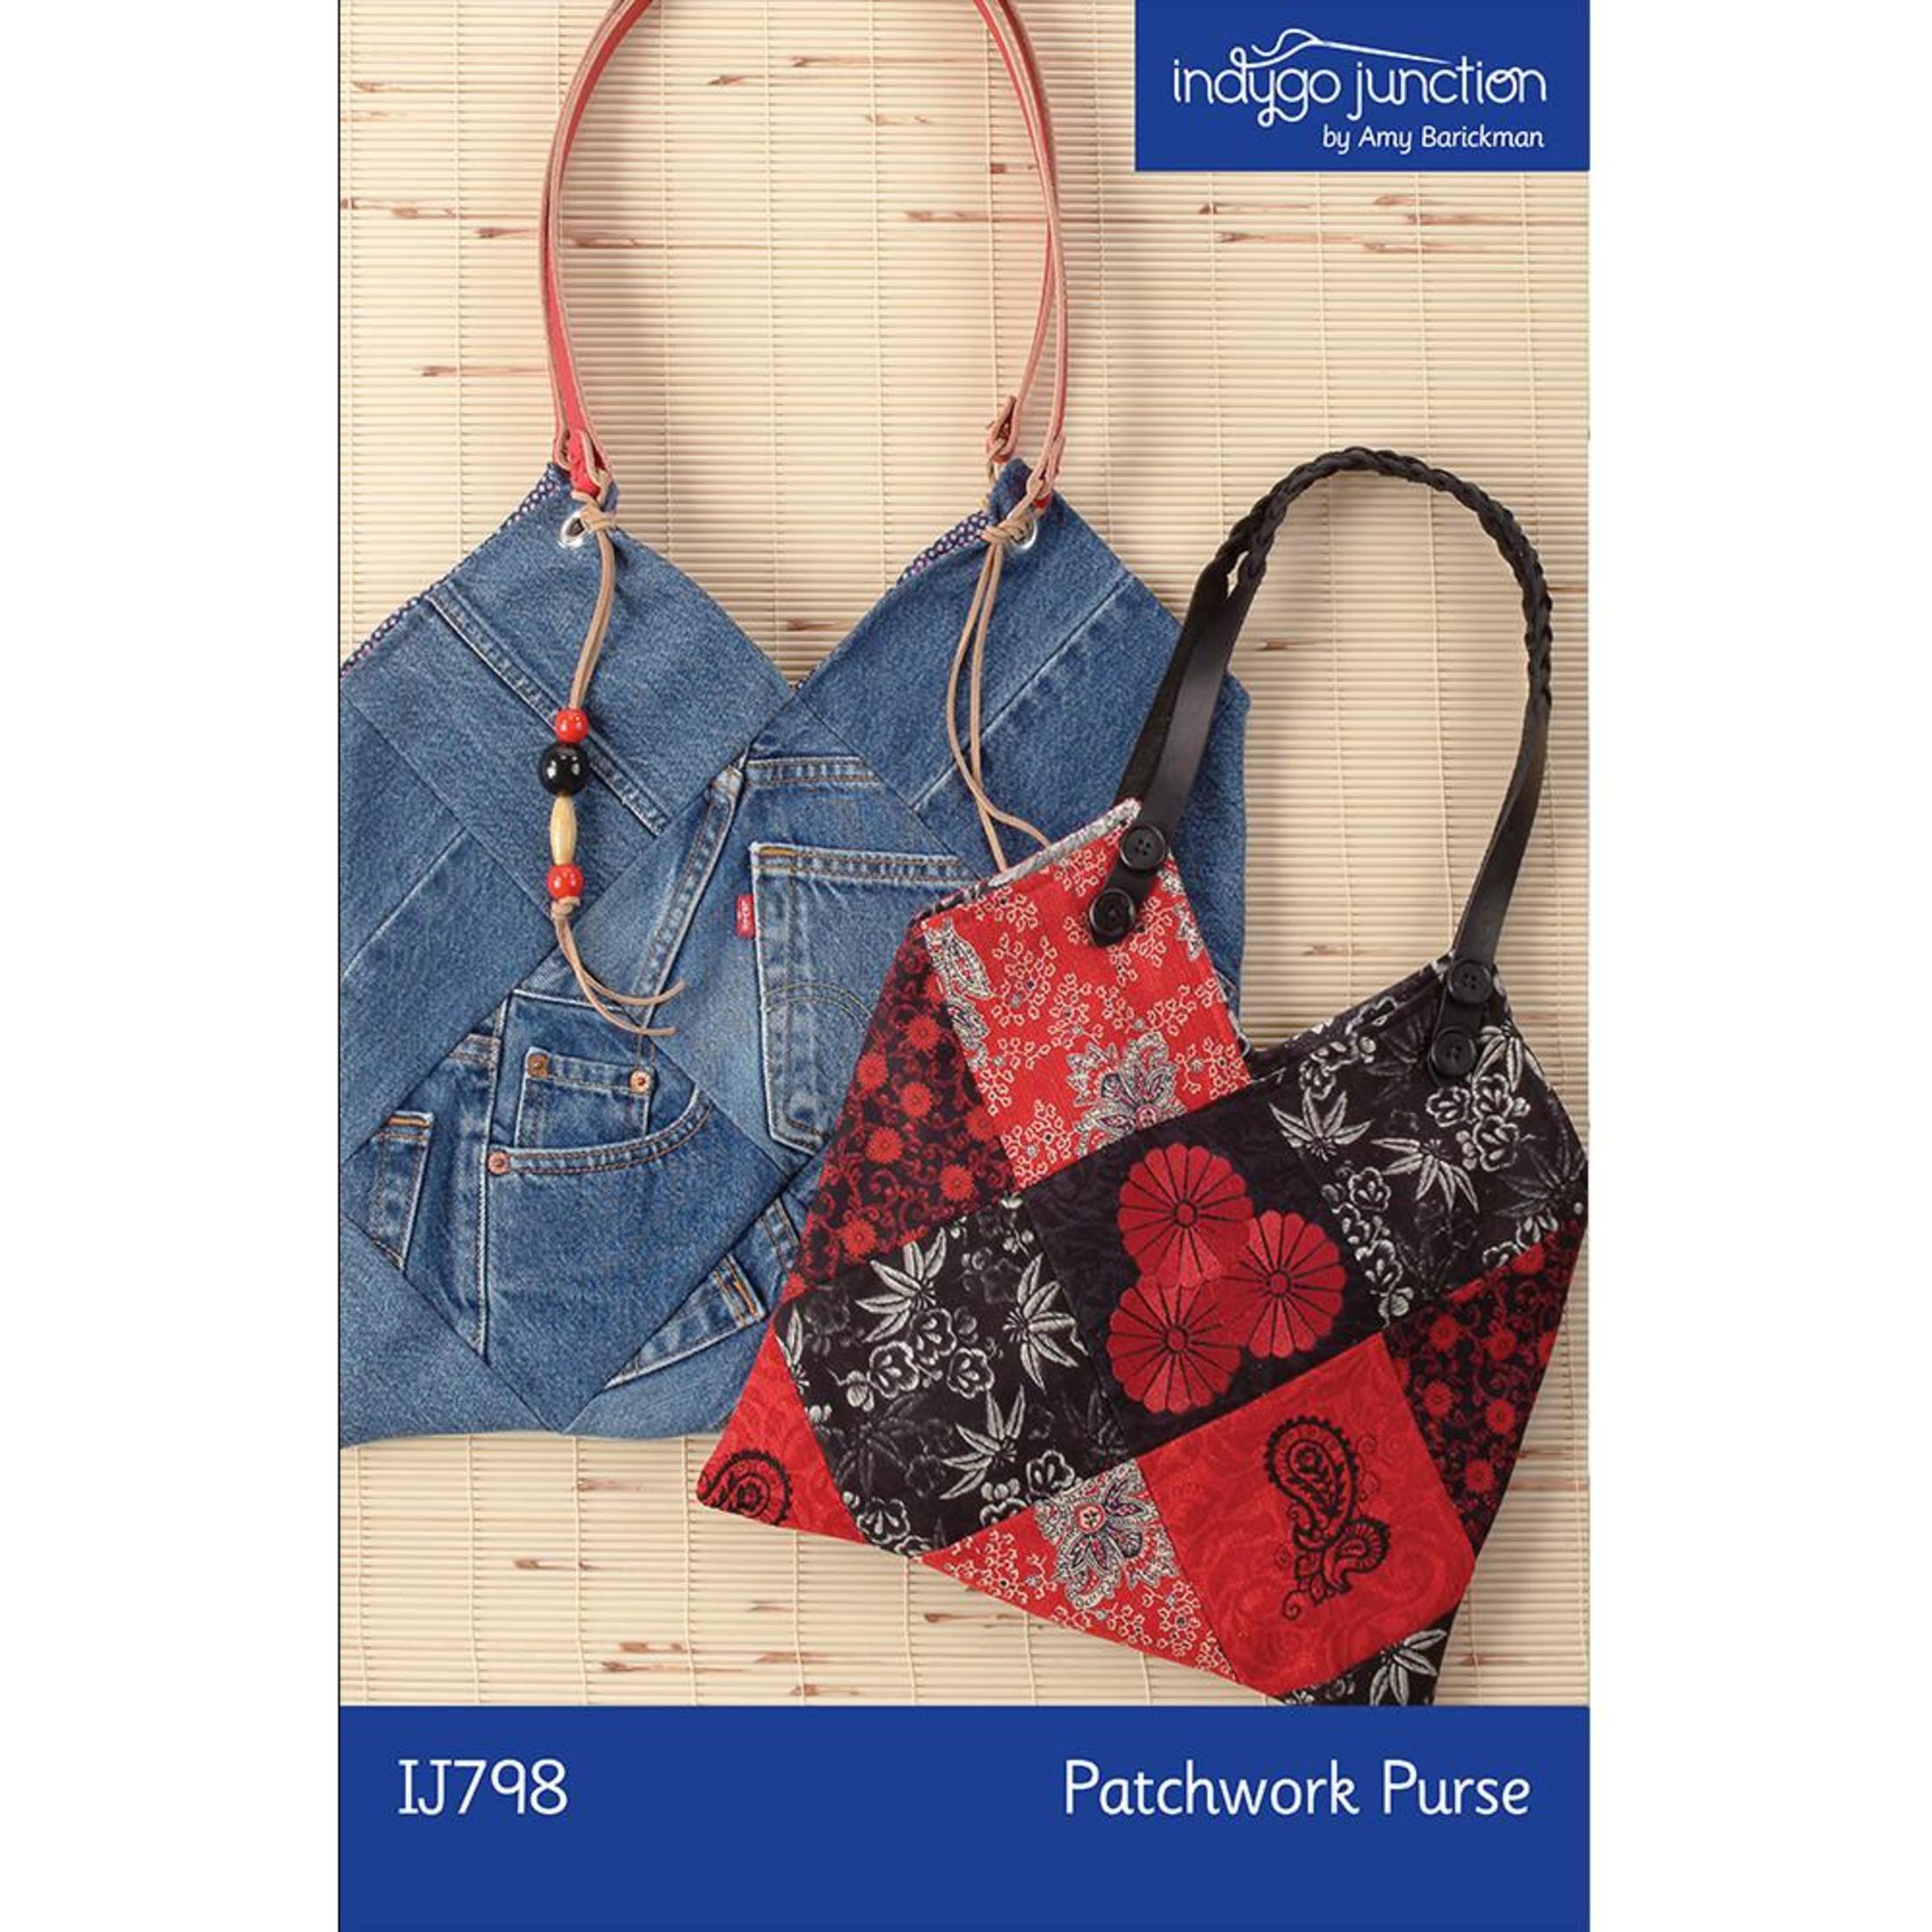 Handmade cloth bag patterns - Art & Craft Ideas | Bag pattern, Bags, Patchwork  bags